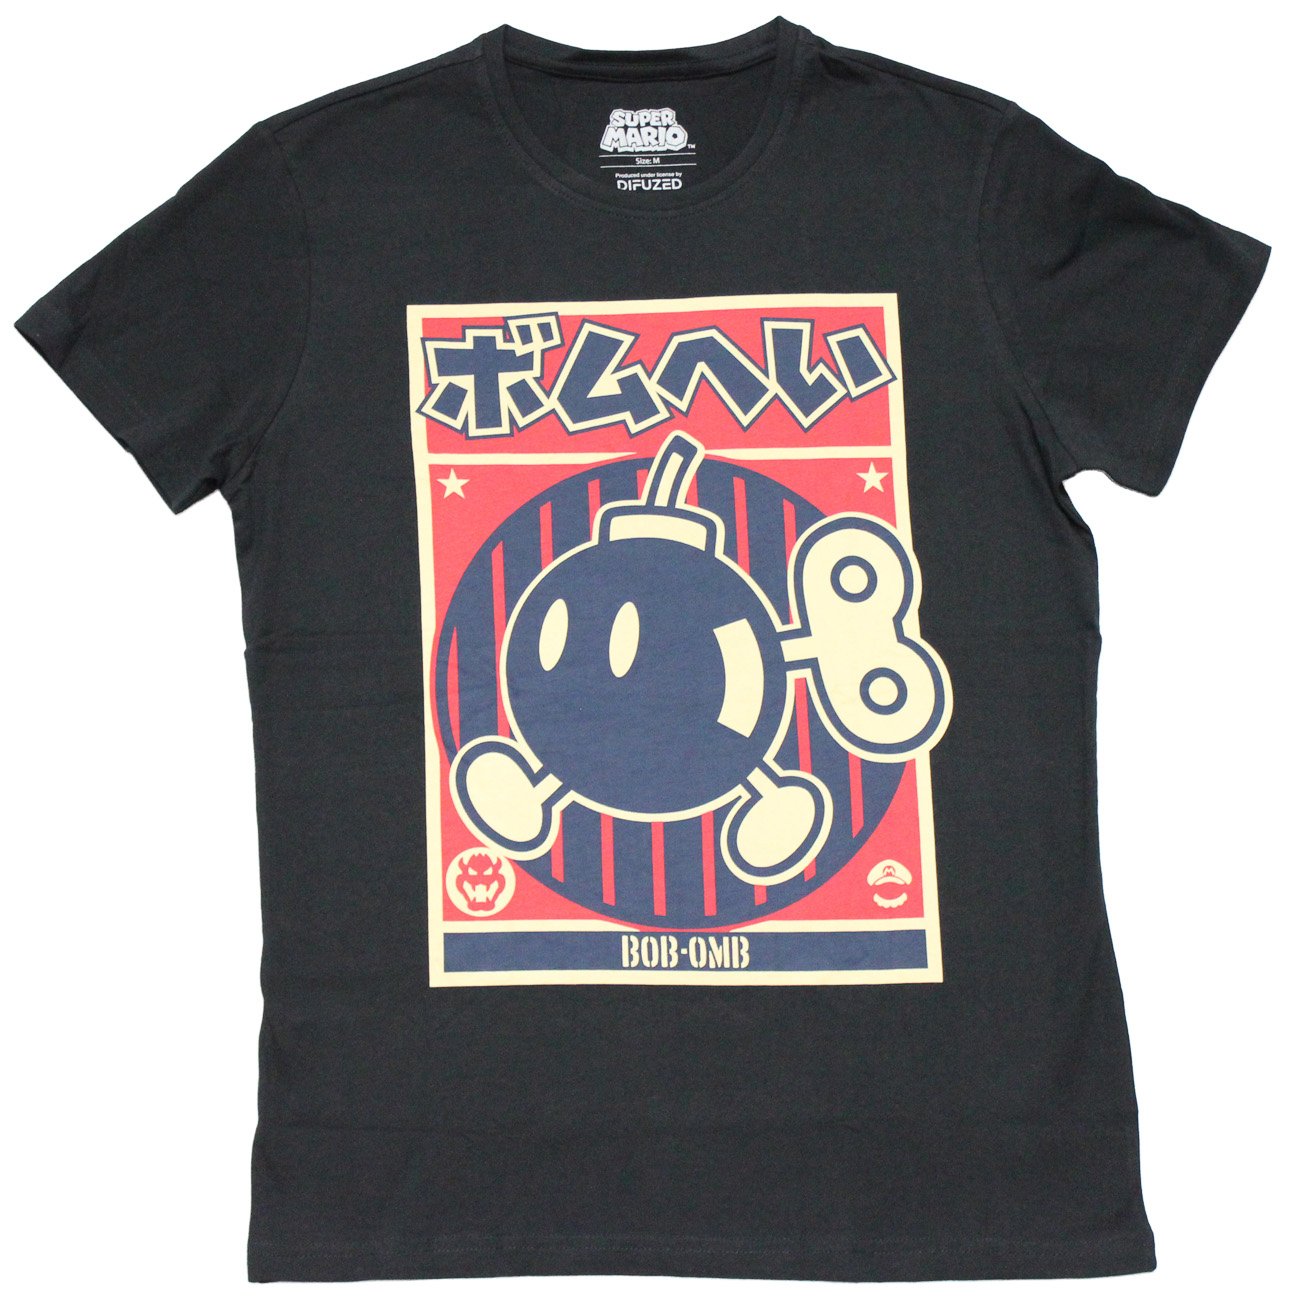 Super Mario Brothers Mens T-shirt - BOB-OMB Under Kanji